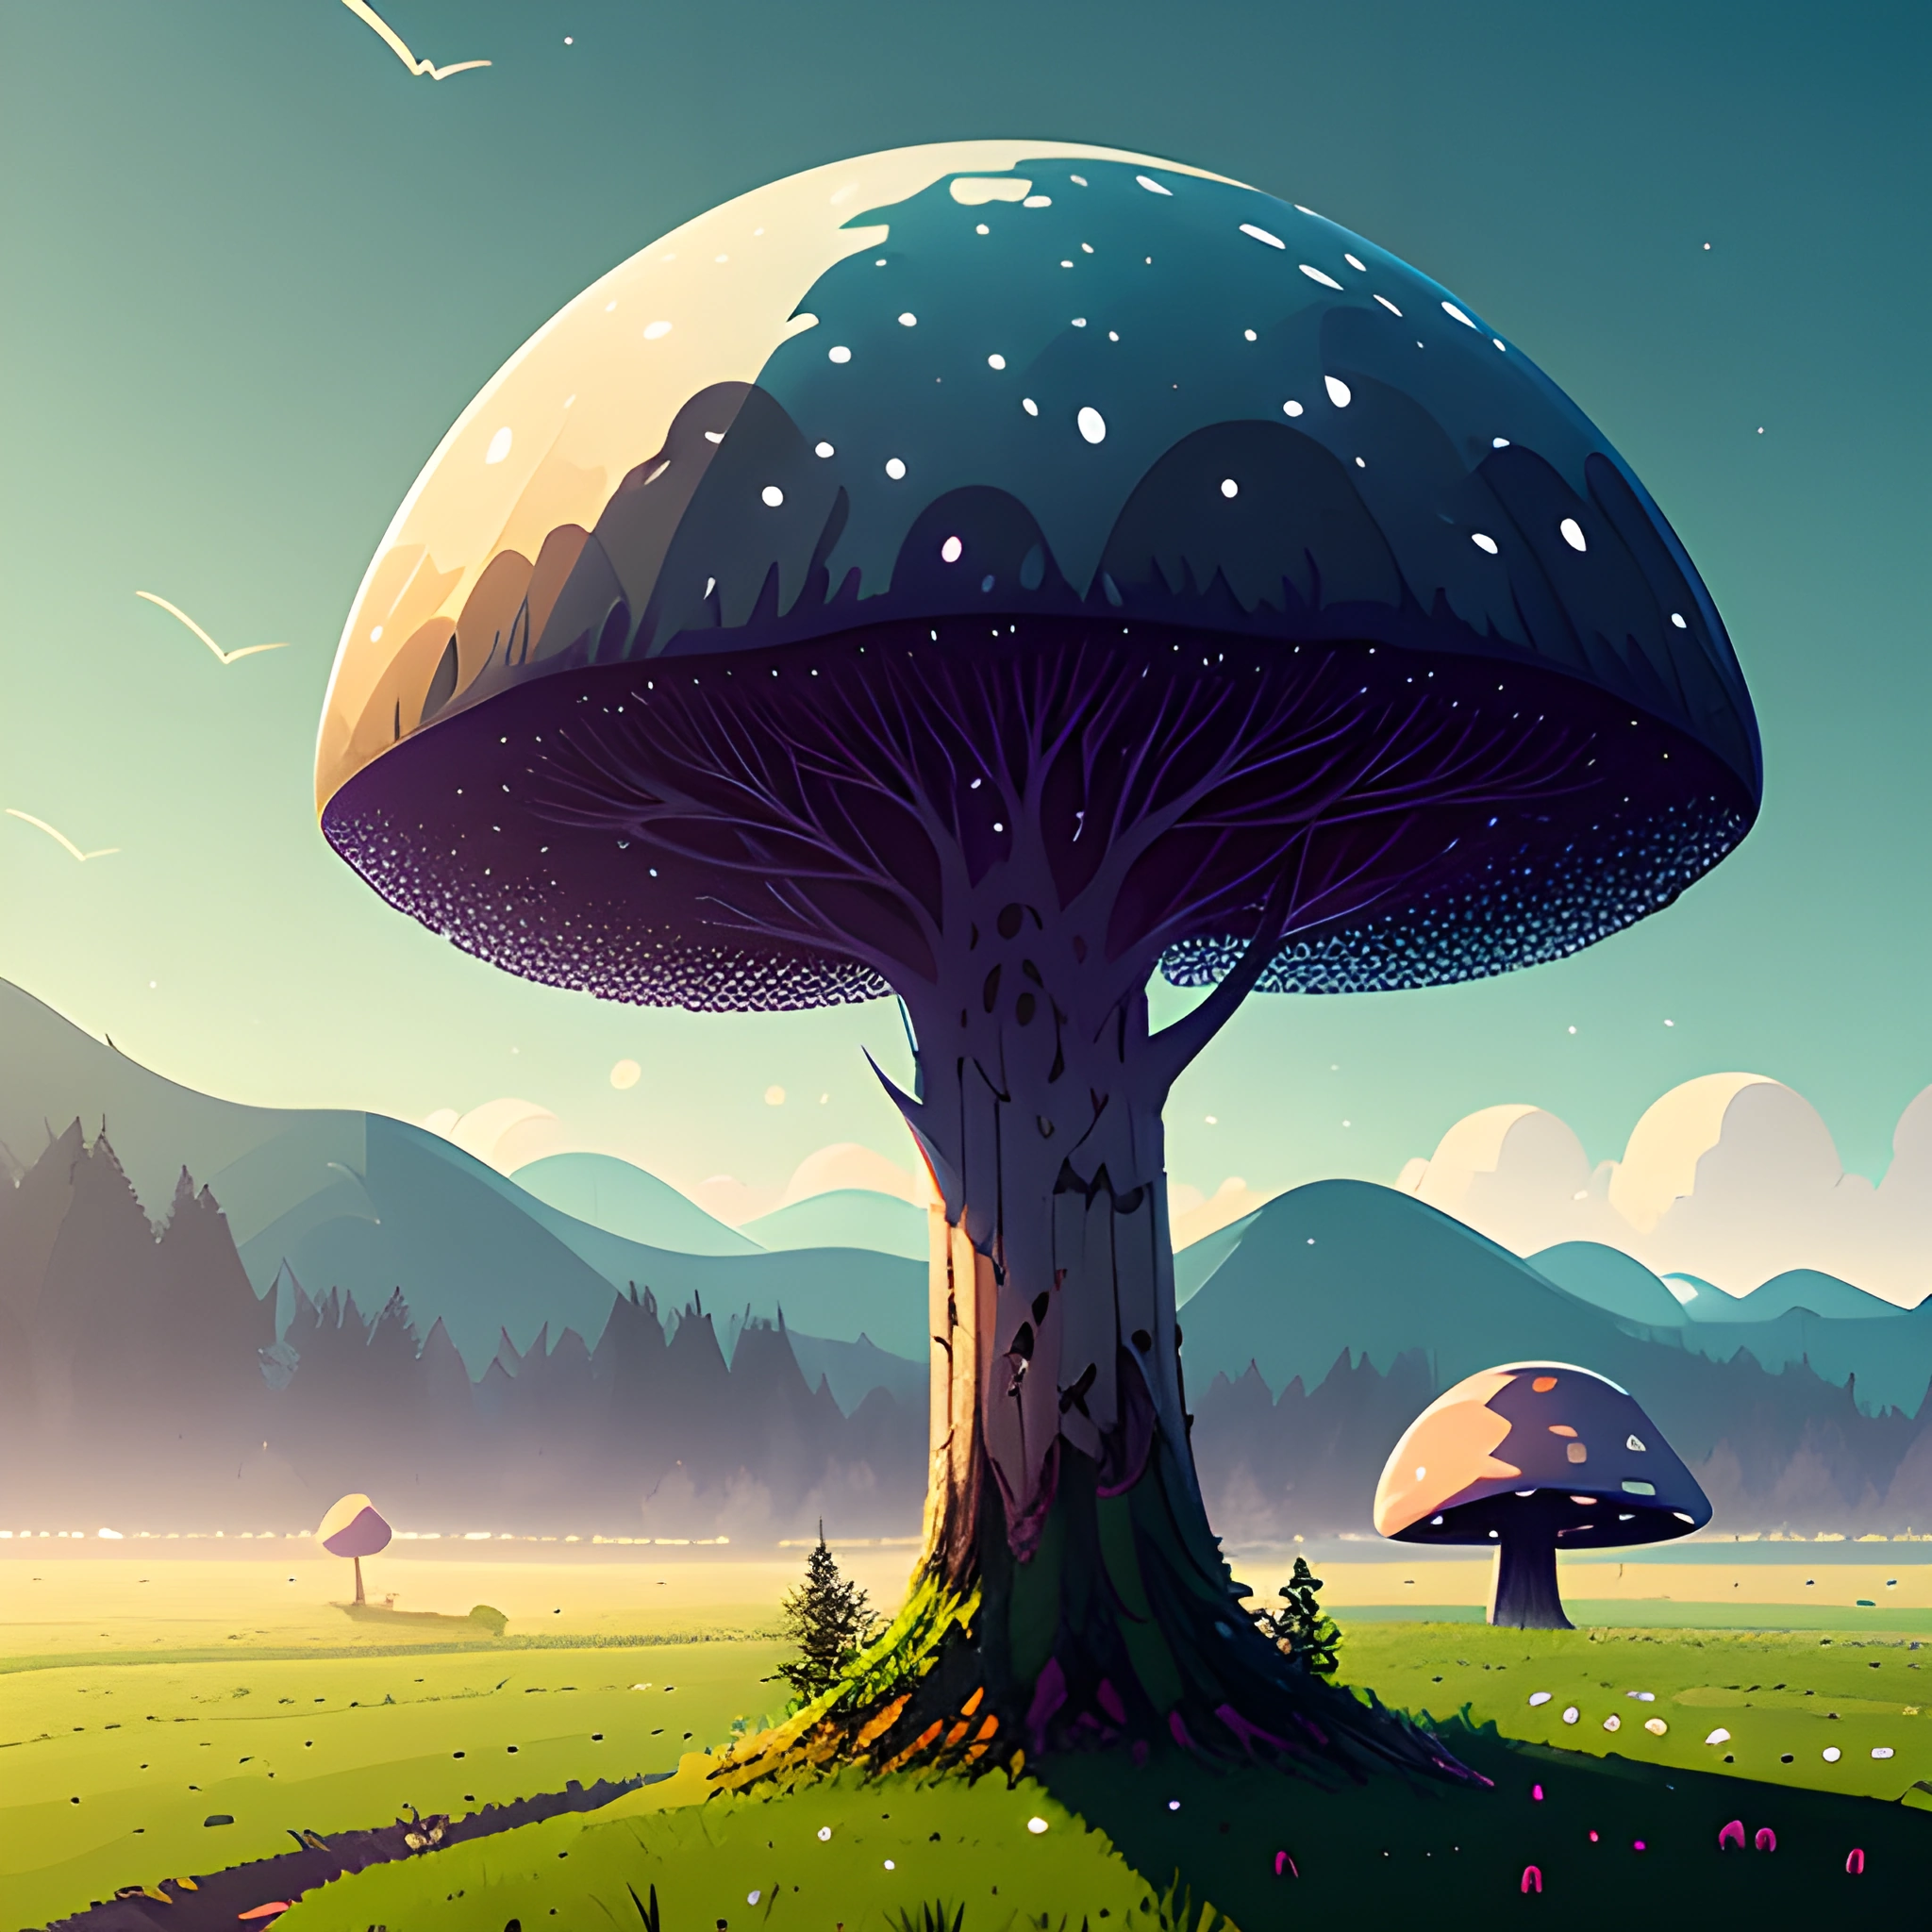 a cartoon style illustration of a mushroom in a field